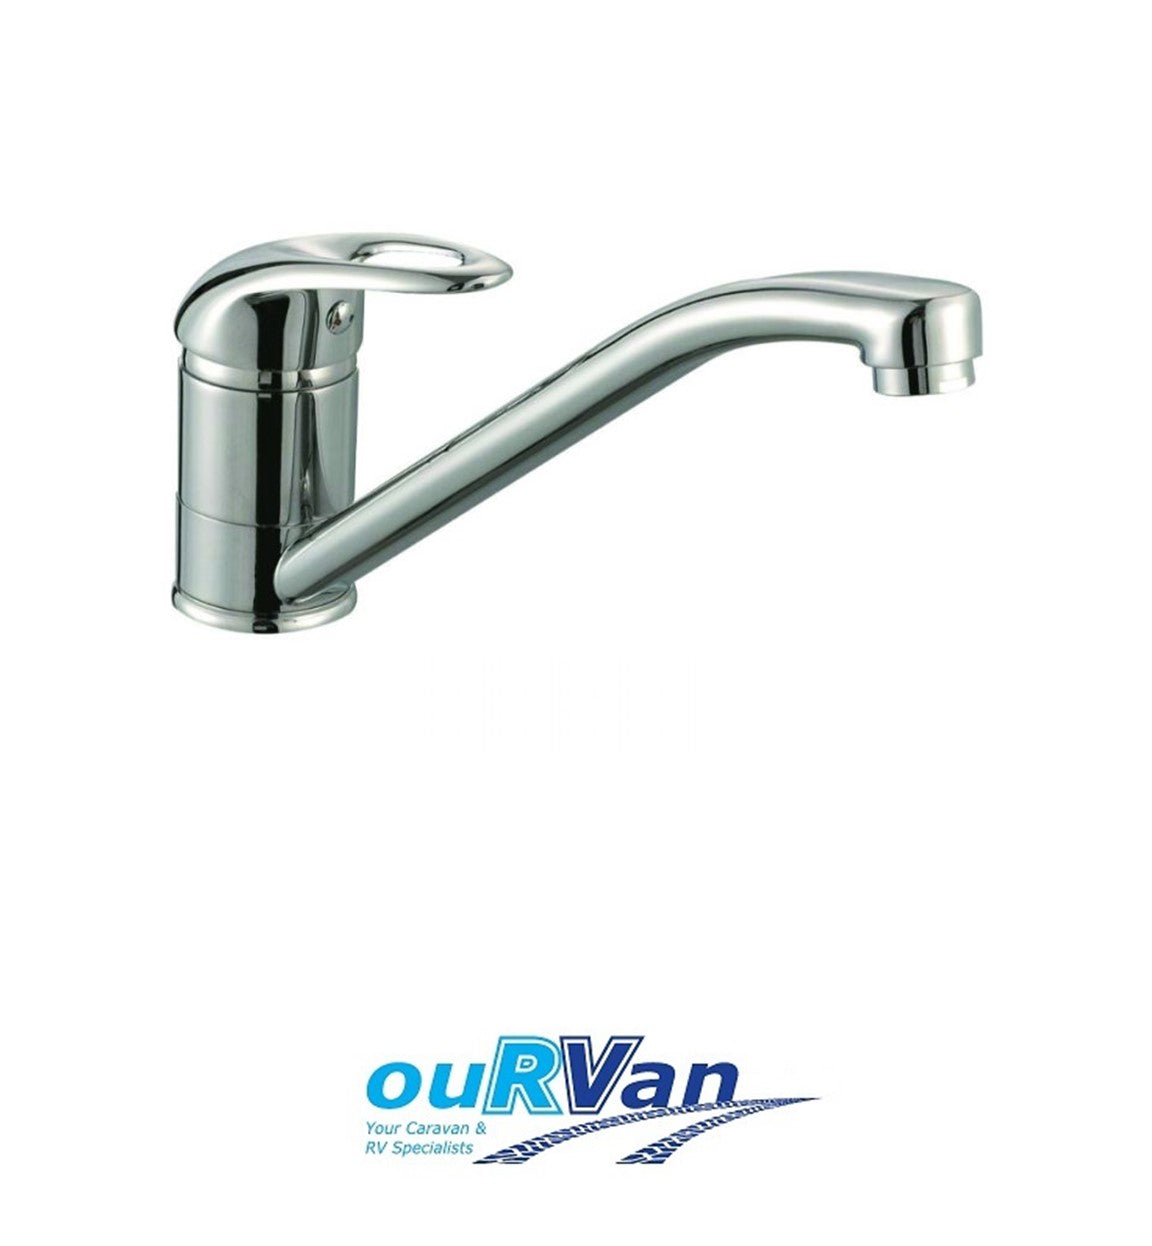 Camec 041675 Sink Mixer Tap 220mm Stainless Steel Wels Rated Sink Basin Caravan